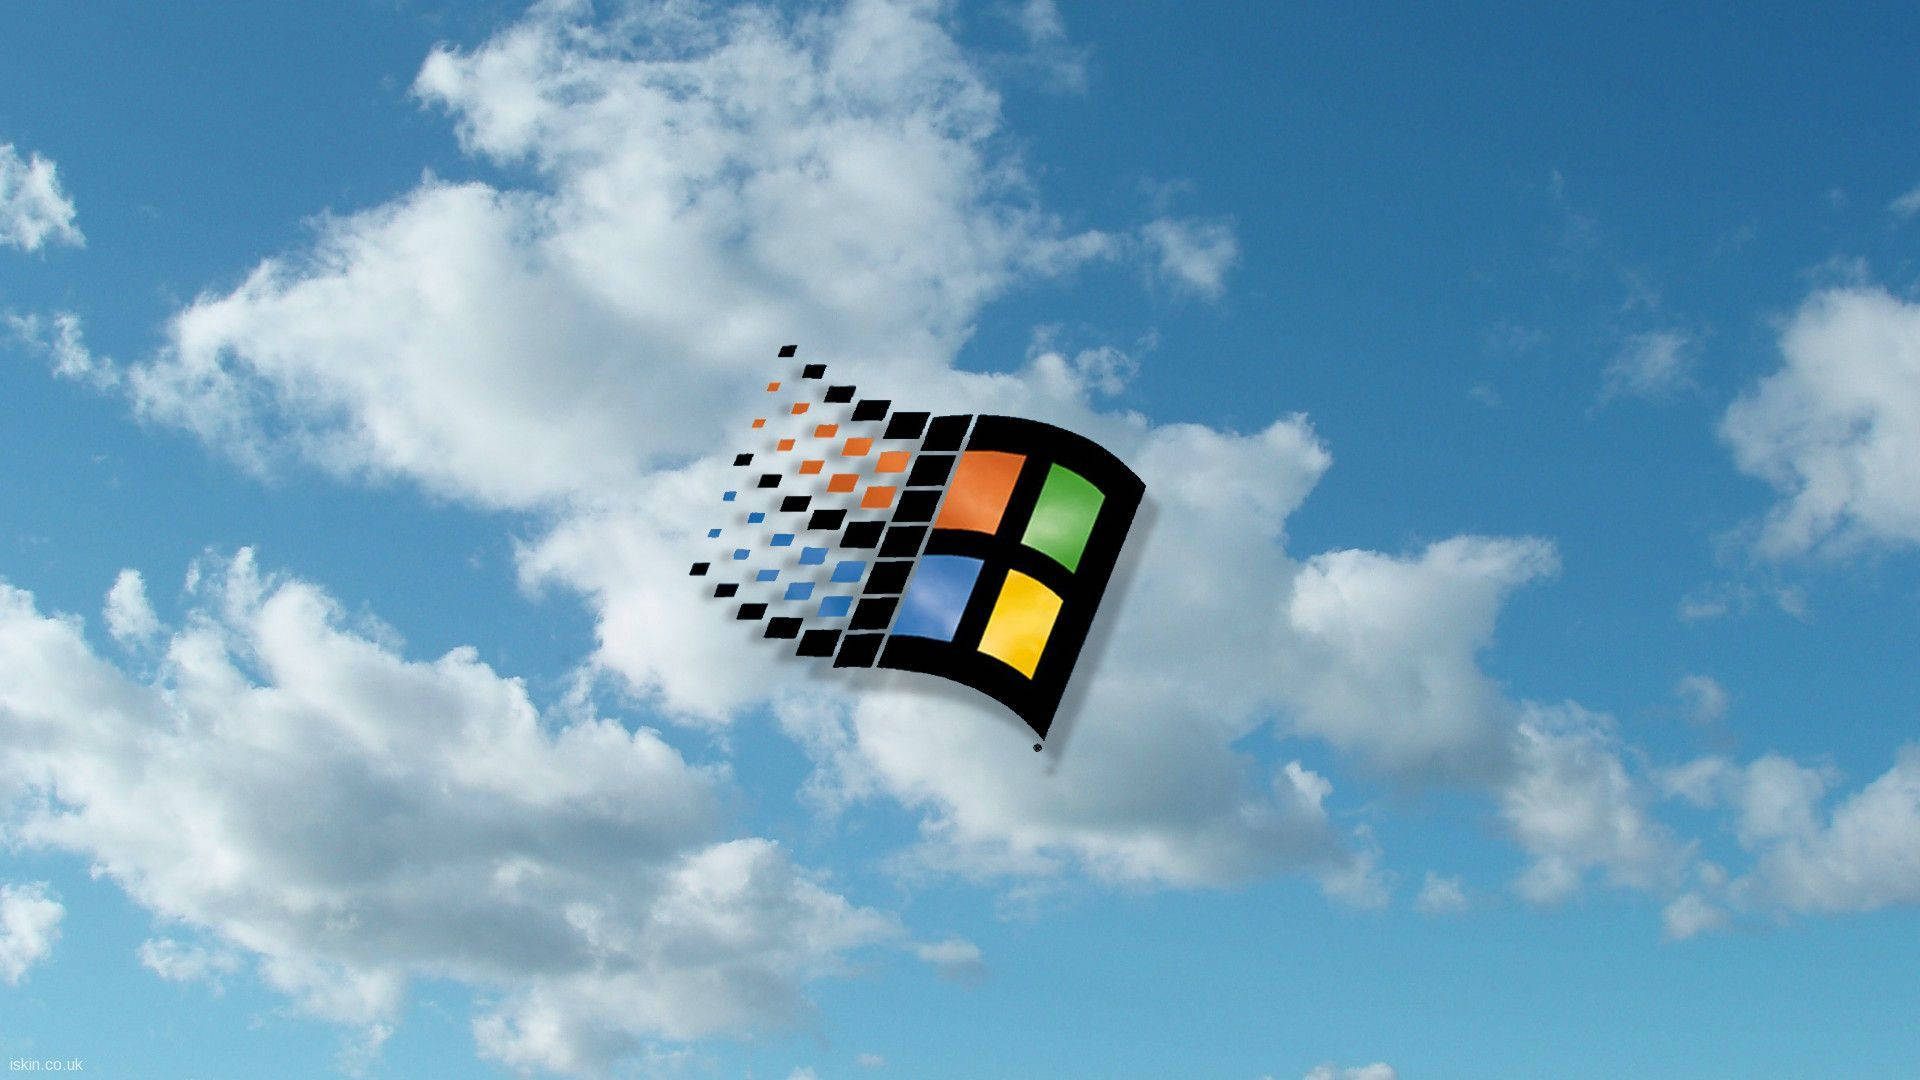 “The Power of Windows 98" Wallpaper